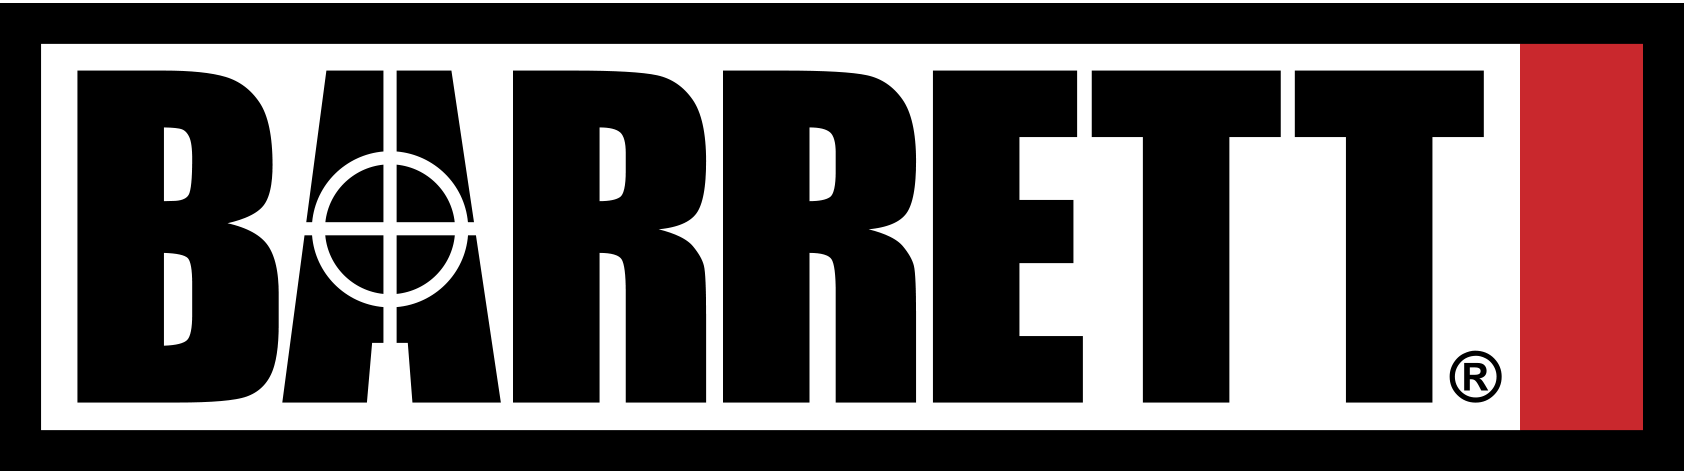 Barrett Logo - Home | Barrett